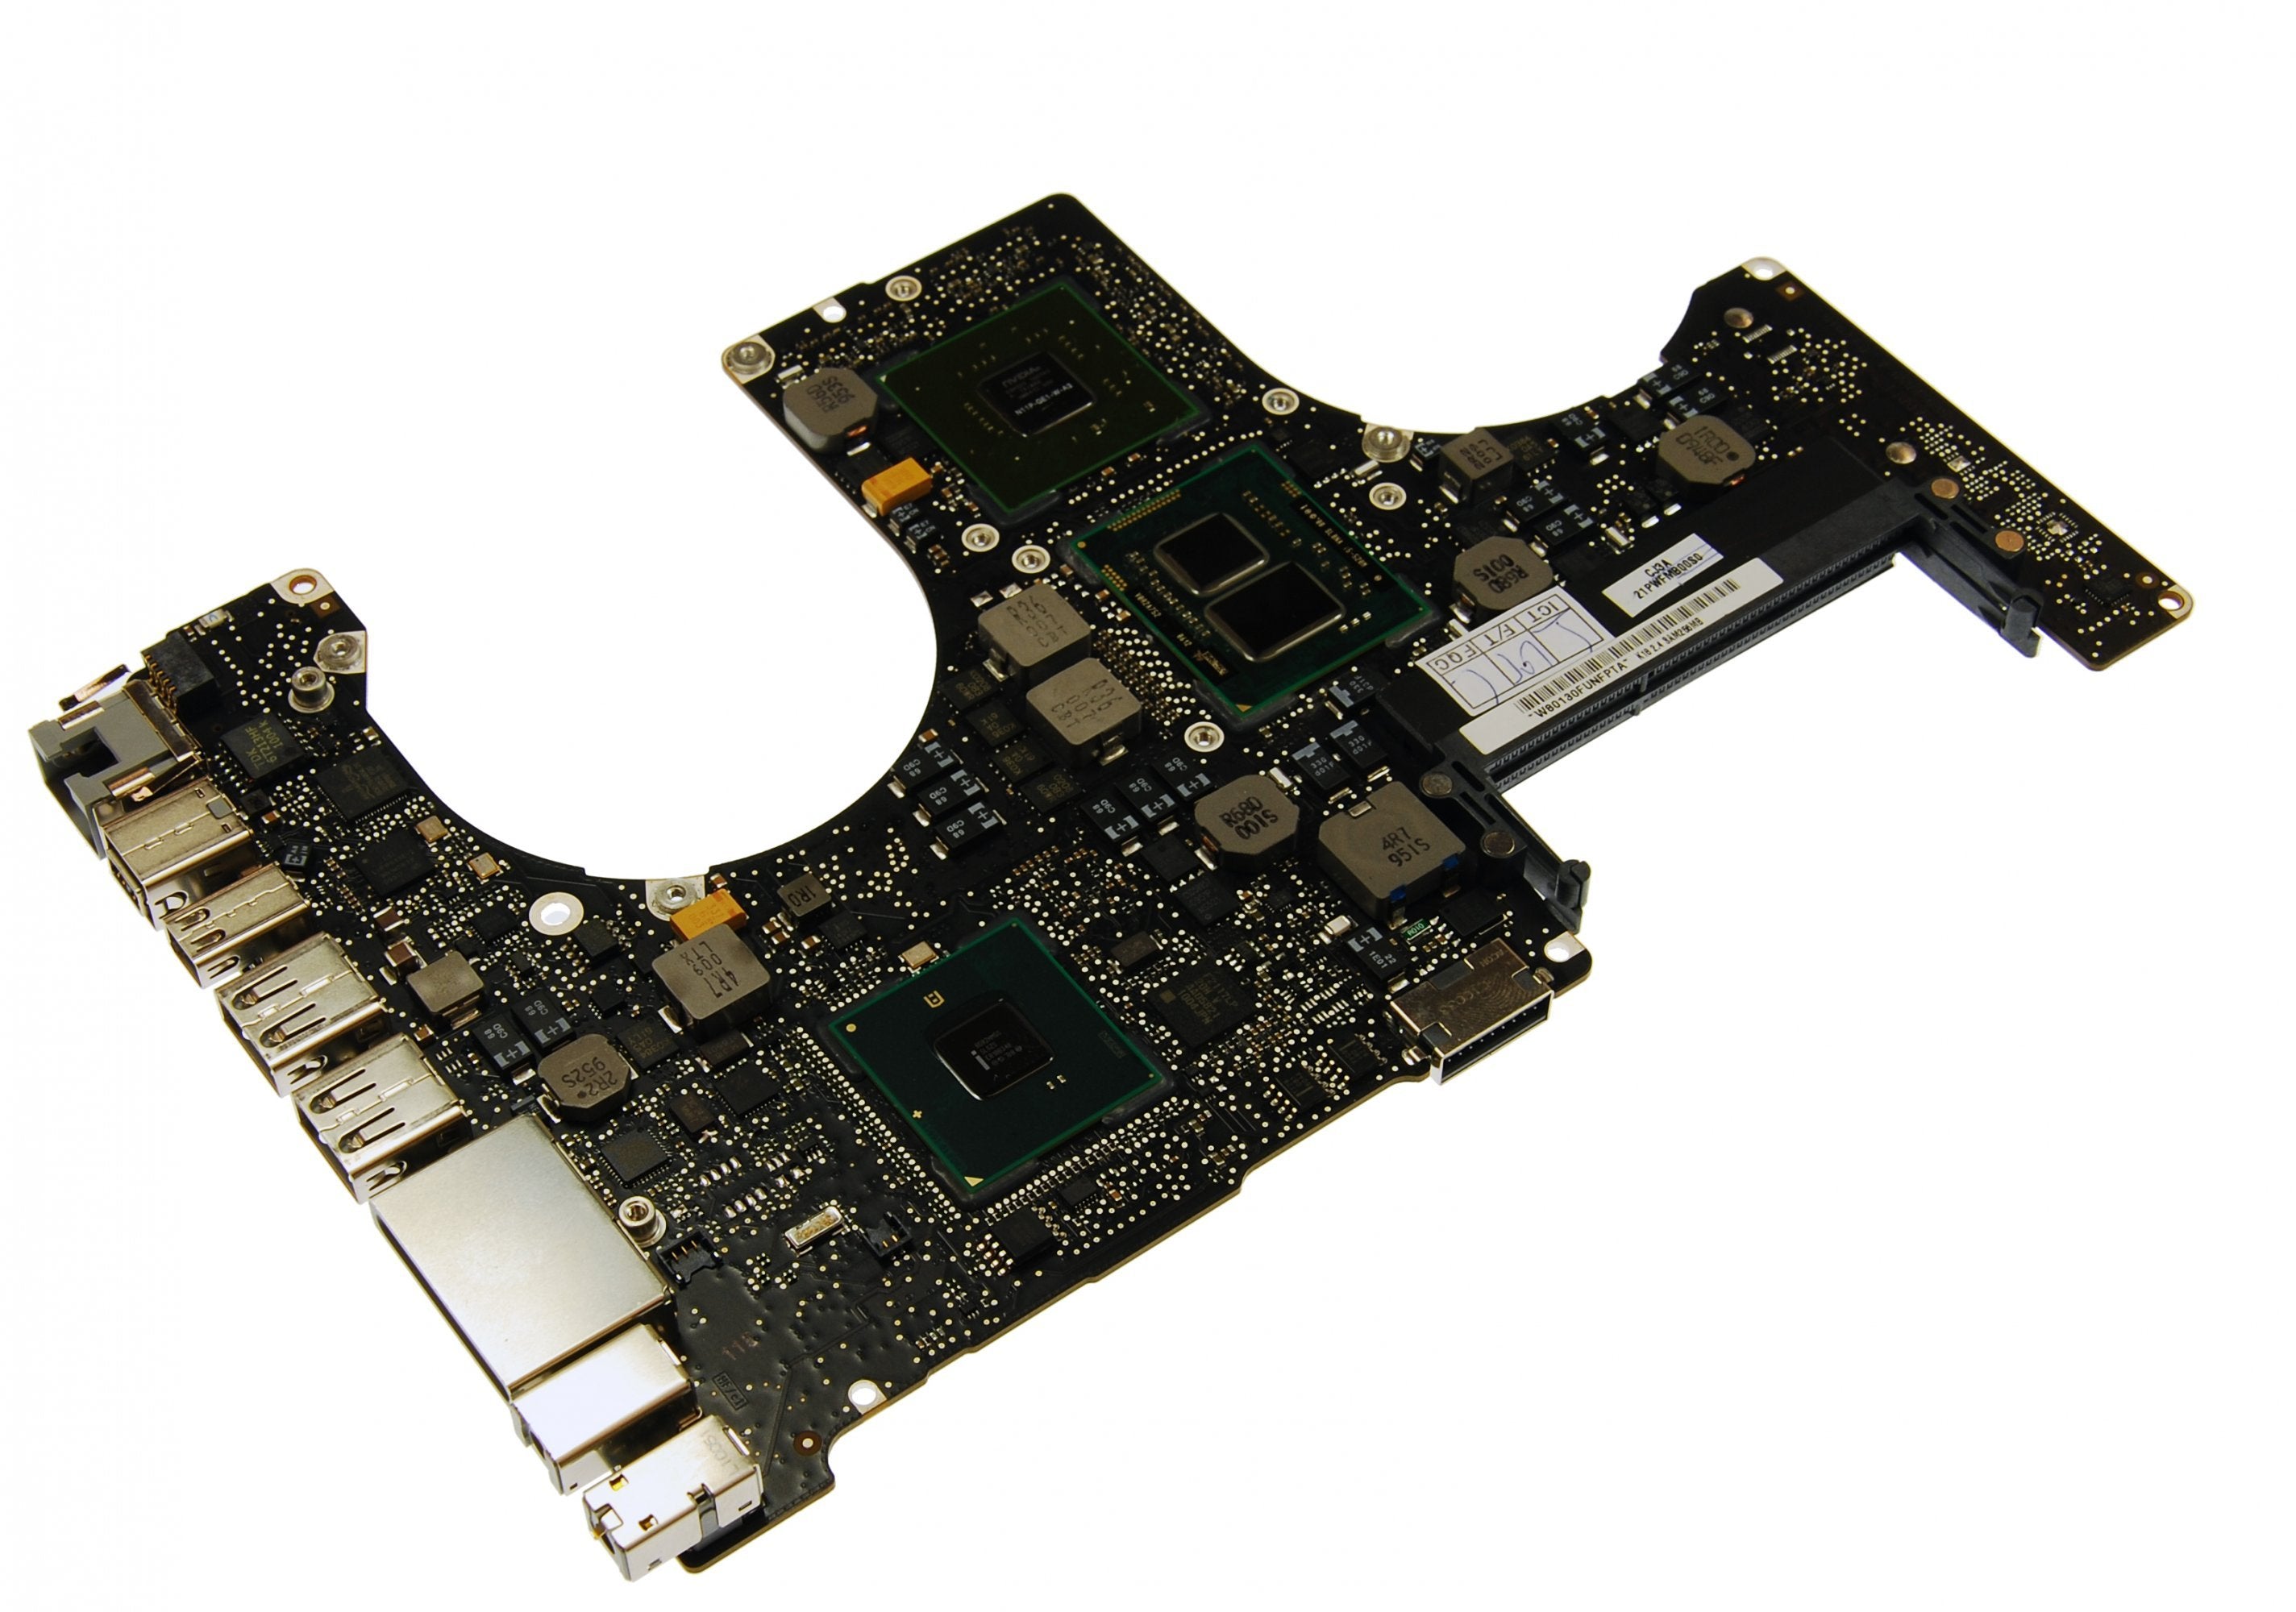 MacBook Pro 15" Unibody (Mid 2010) 2.4 GHz Logic Board